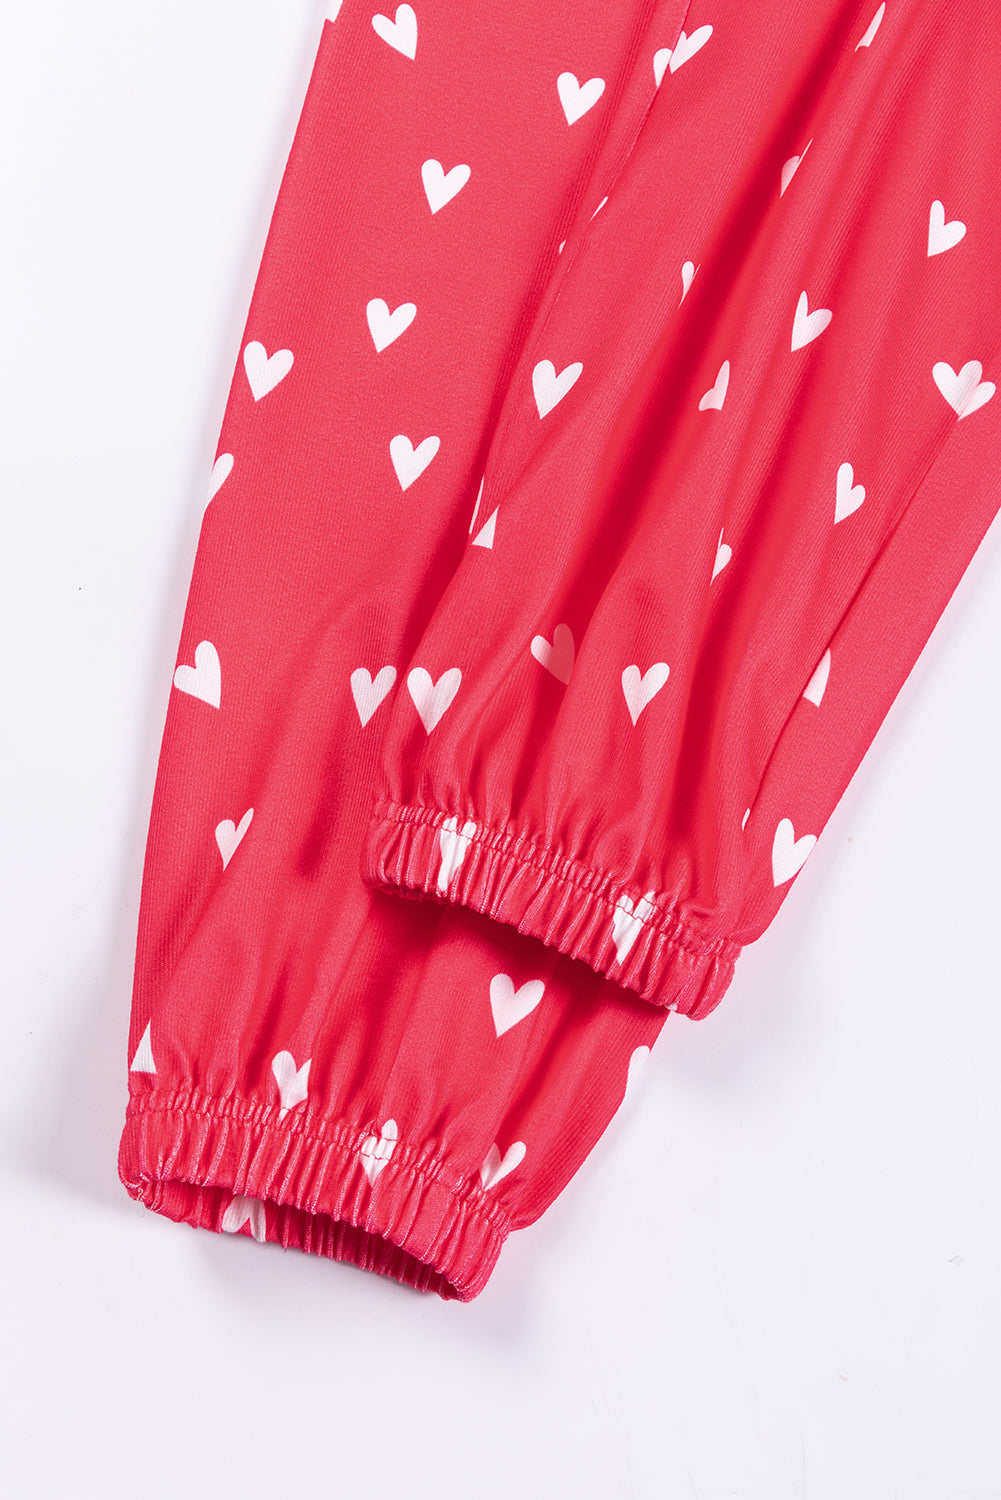 Vatreno crveni komplet hlača s printom srca za Valentinovo